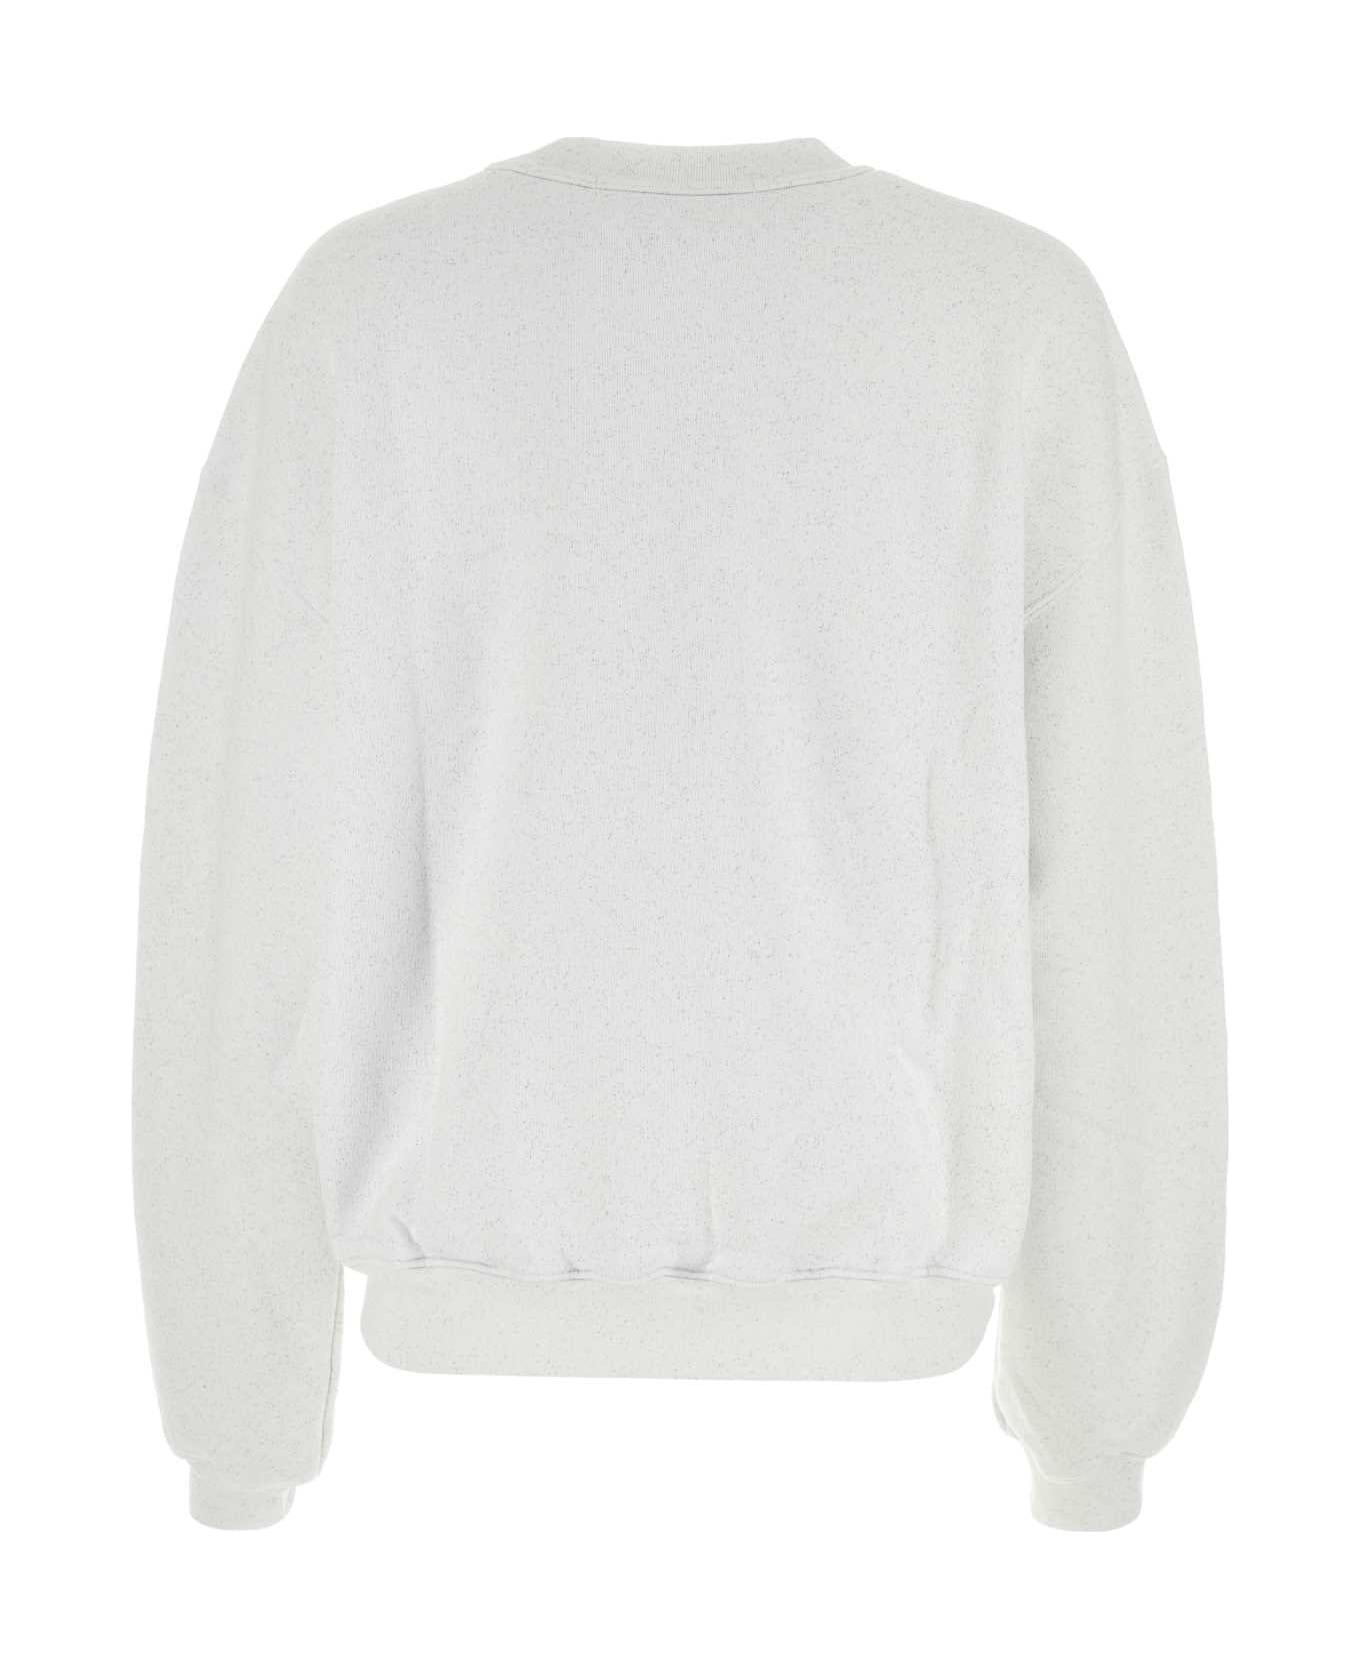 Alexander Wang Melange White Cotton Oversize Sweatshirt - BRIGHTWHITE